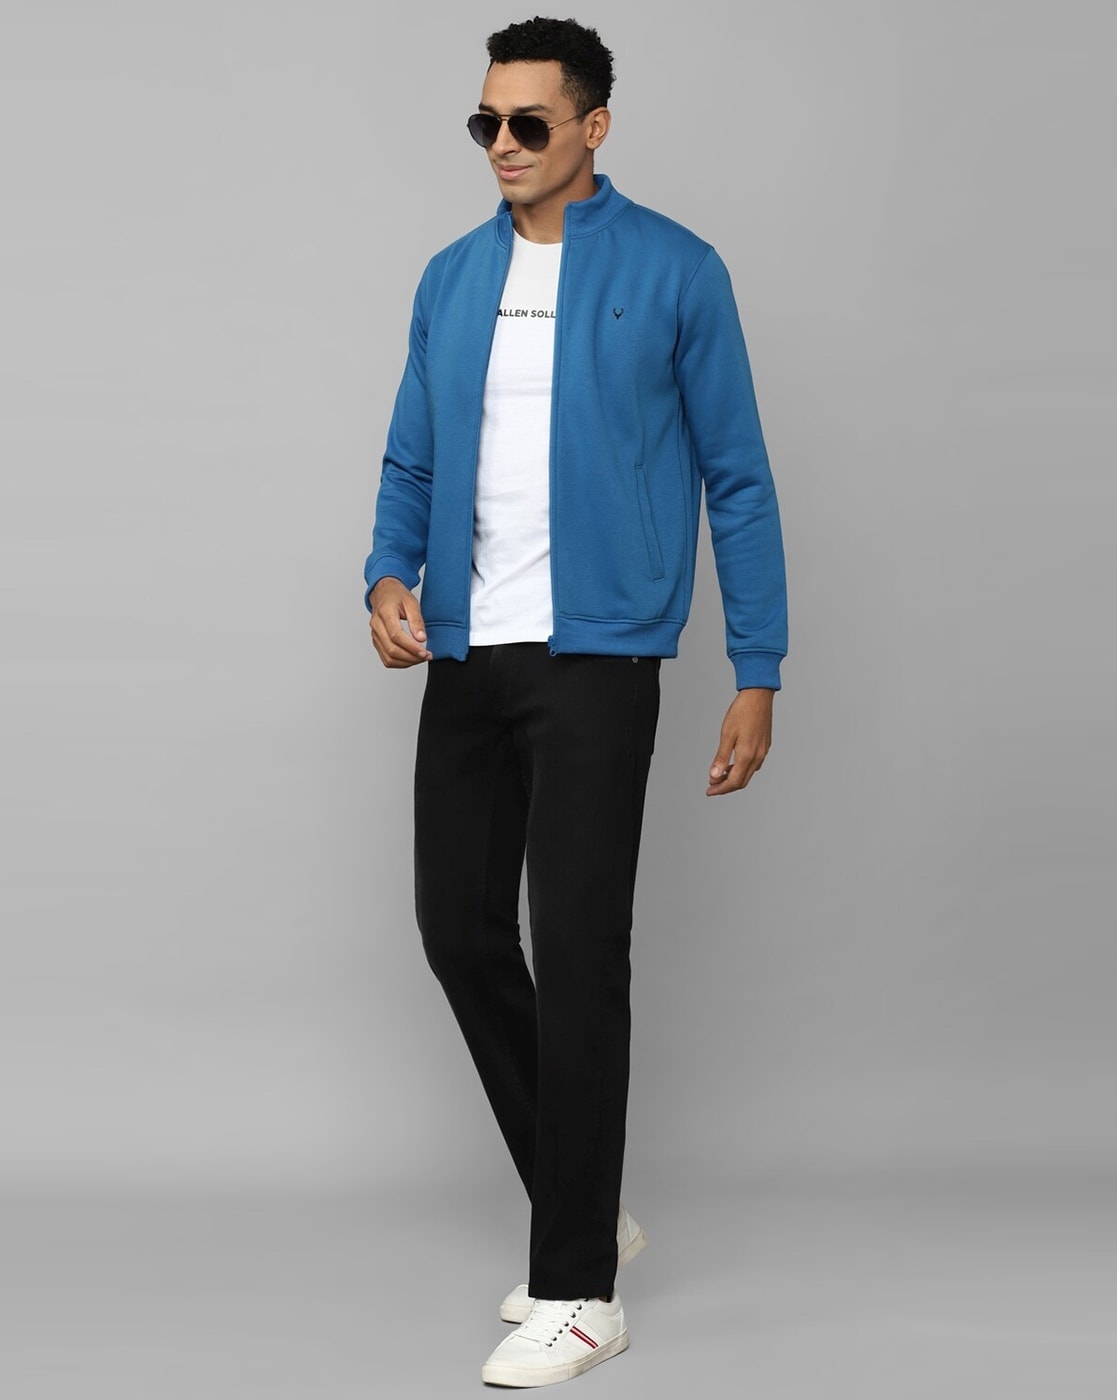 Allen Solly ASSTORGB596160 Blue Sweatshirt (Size S) in Lucknow at